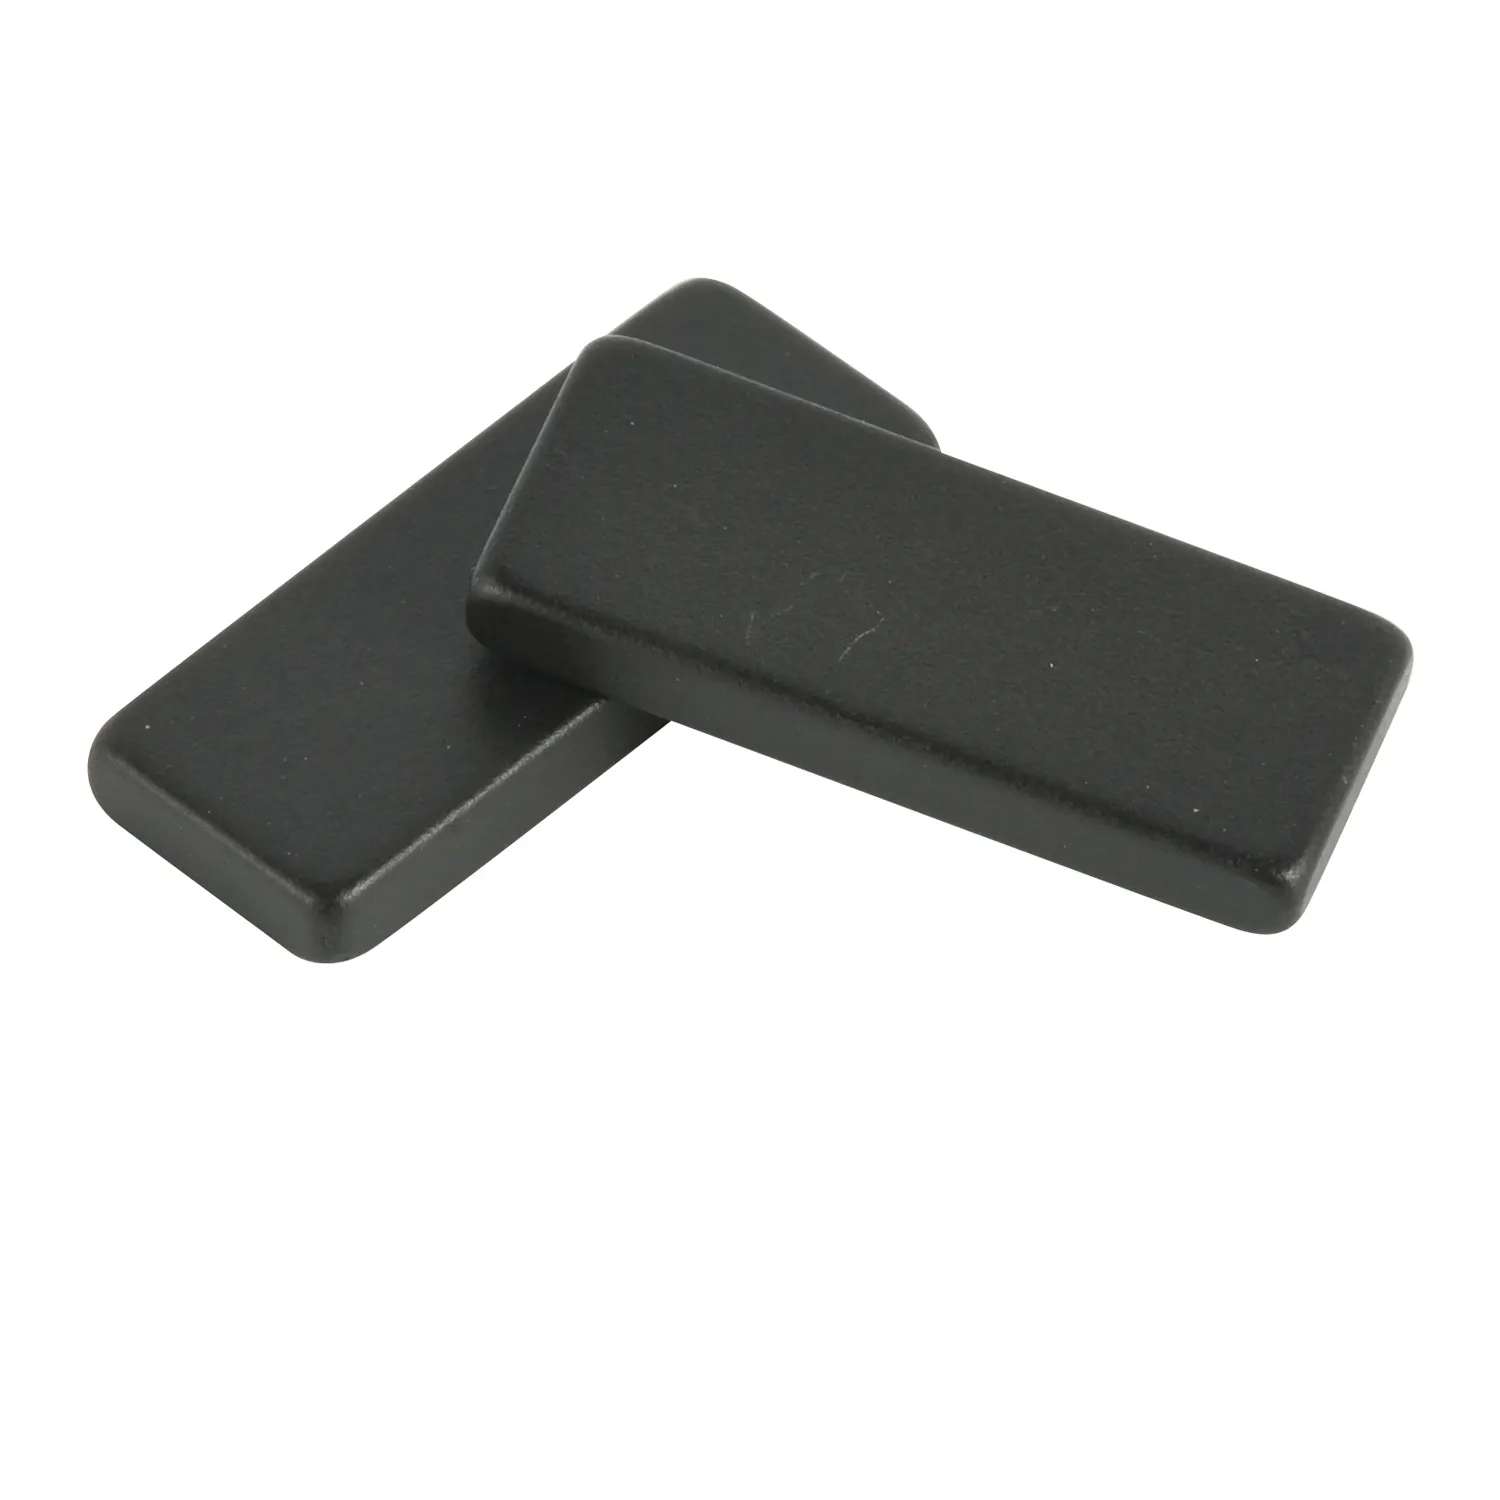 Standard N52 20x10x10mm Block Neodymium Magnet with Black Epoxy Coating